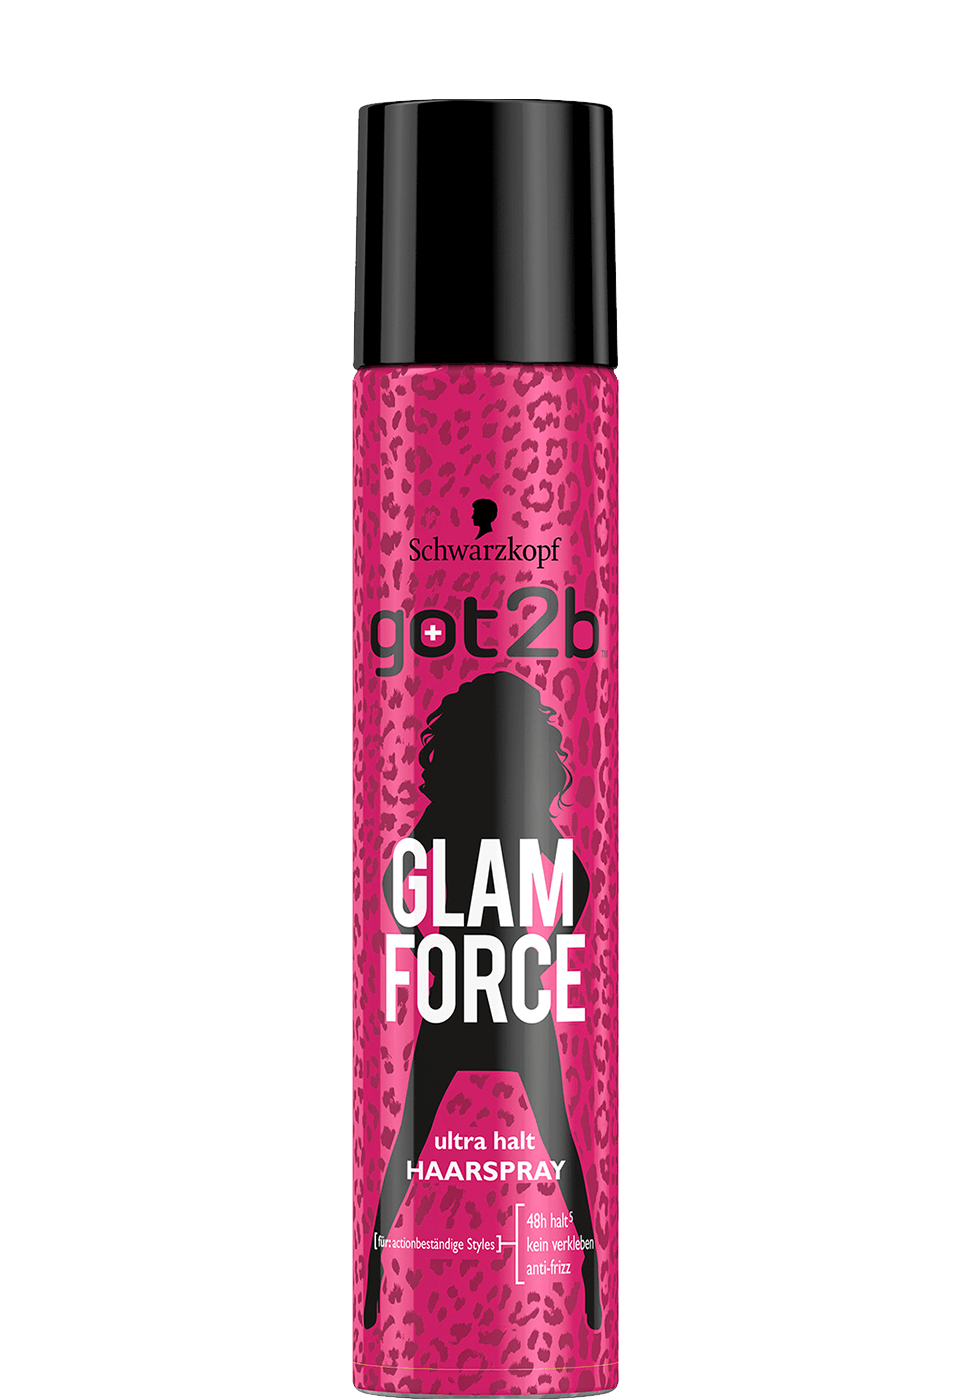 Got2b Glam Force Hairspray